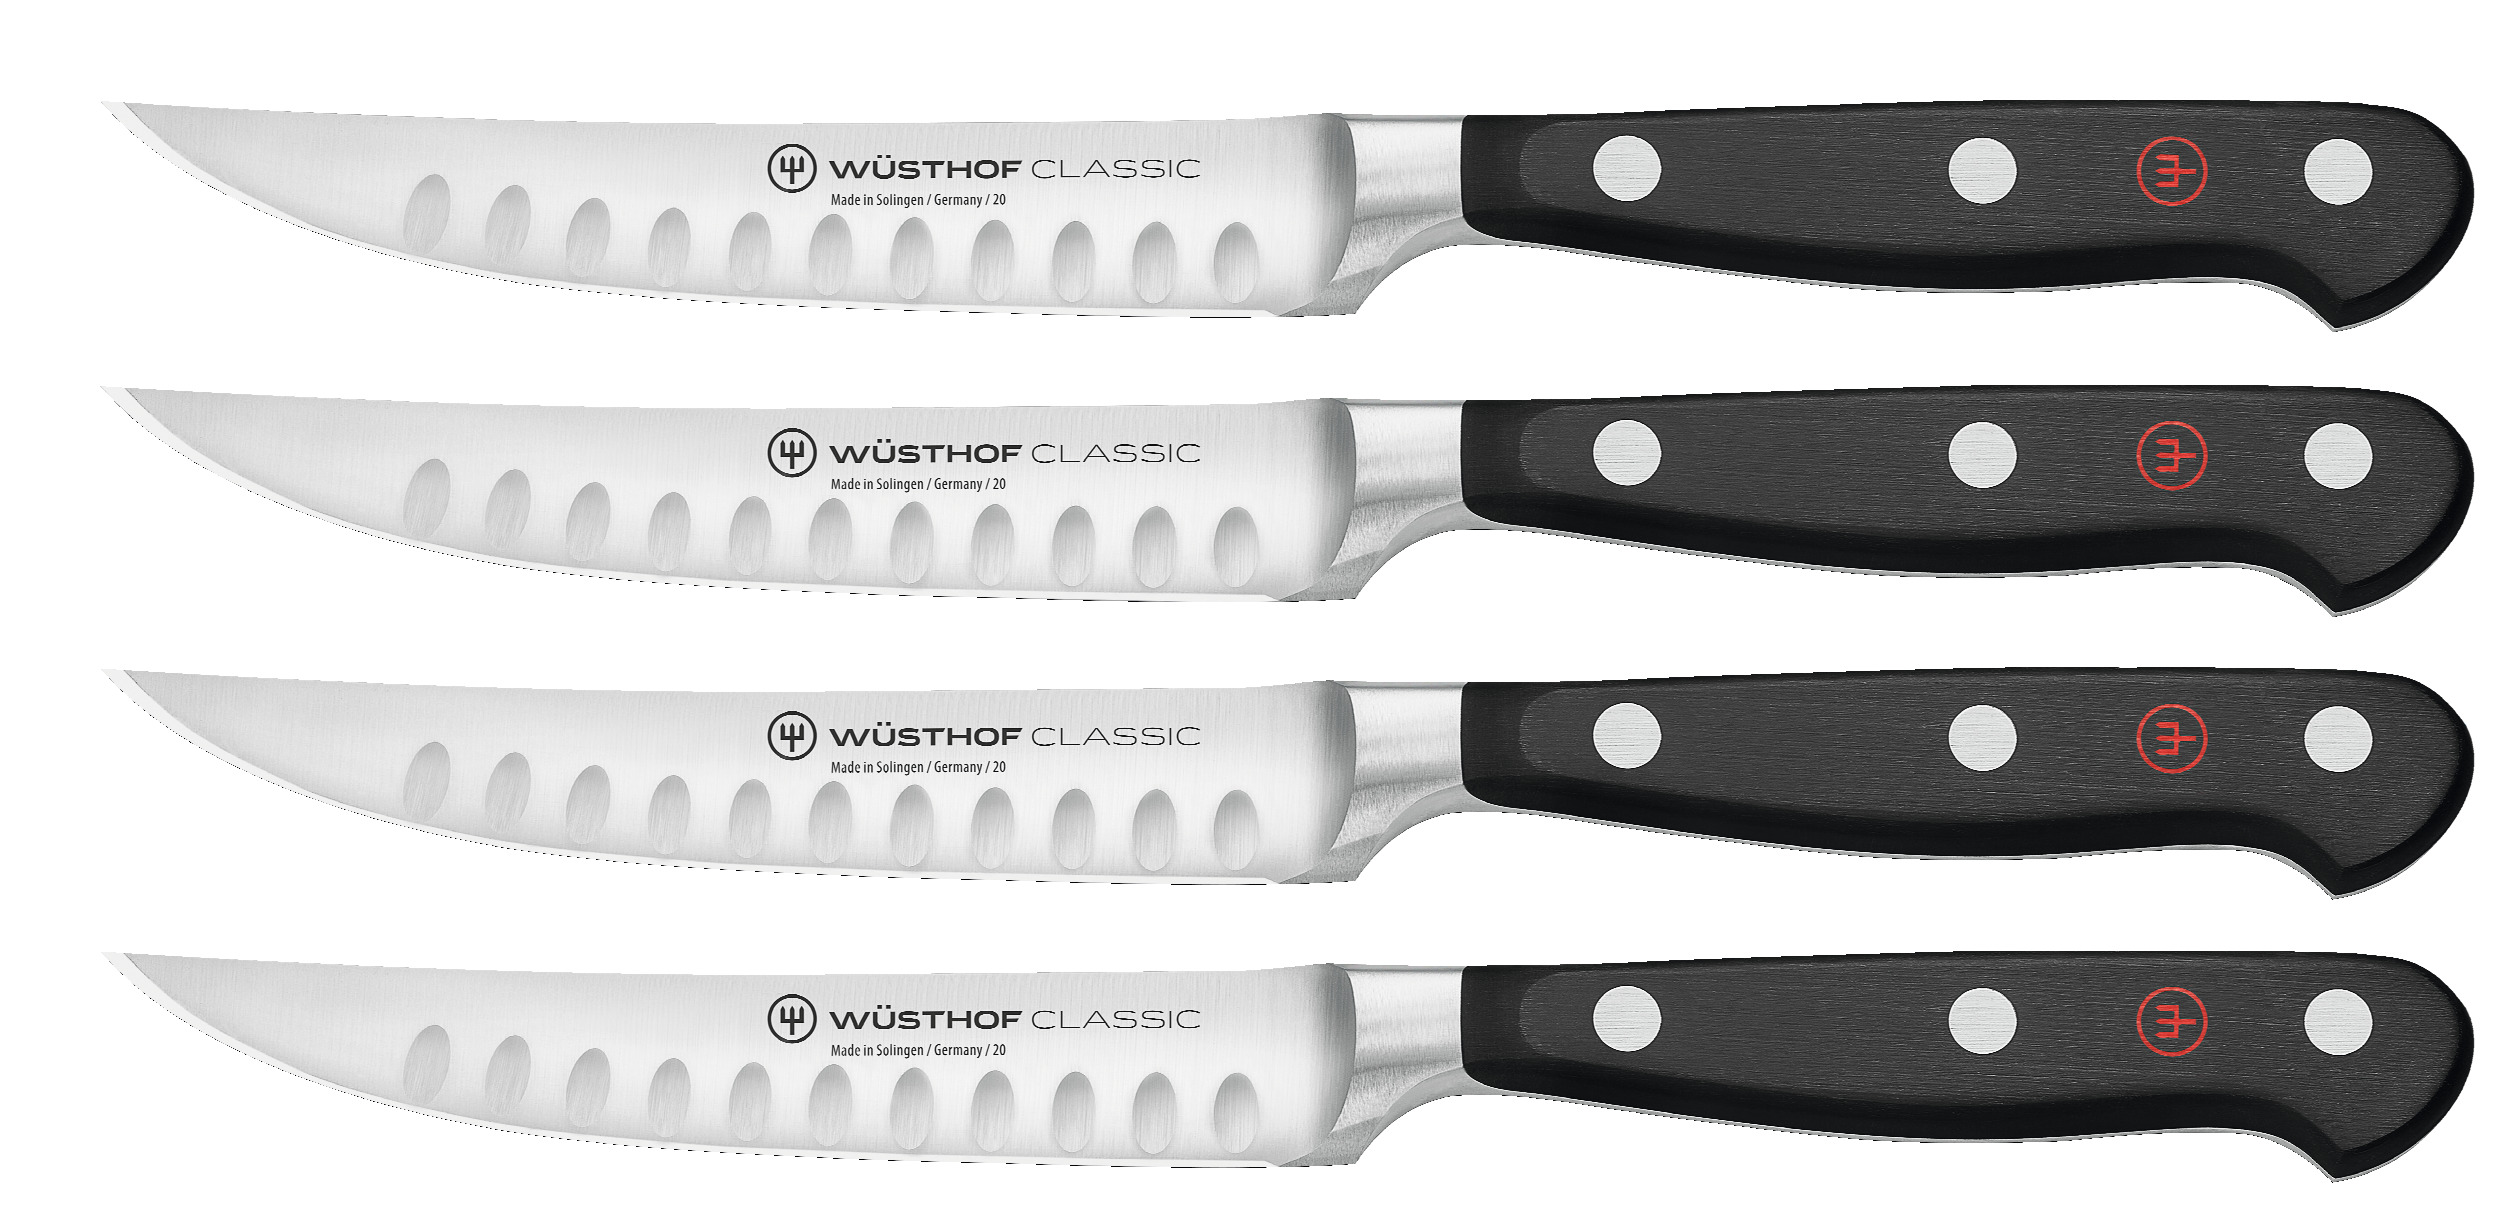  Wüsthof Classic Steak Knife Set, 4-Piece: Wusthof